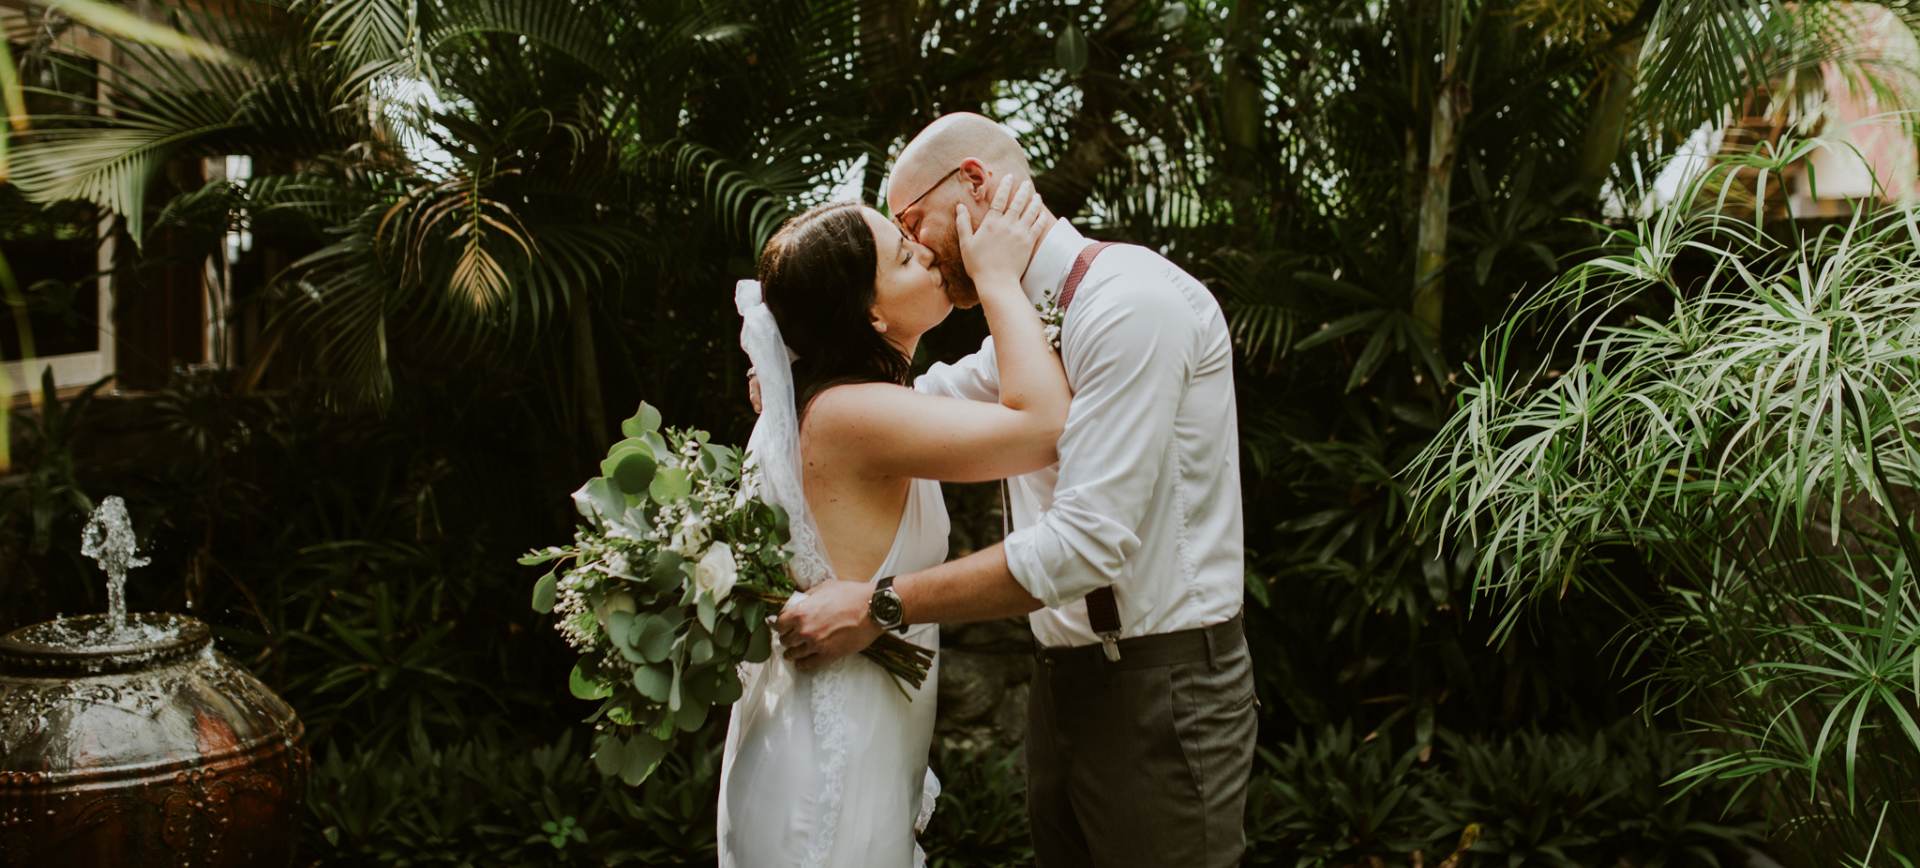 bali elopement wedding - bride & groom kissing